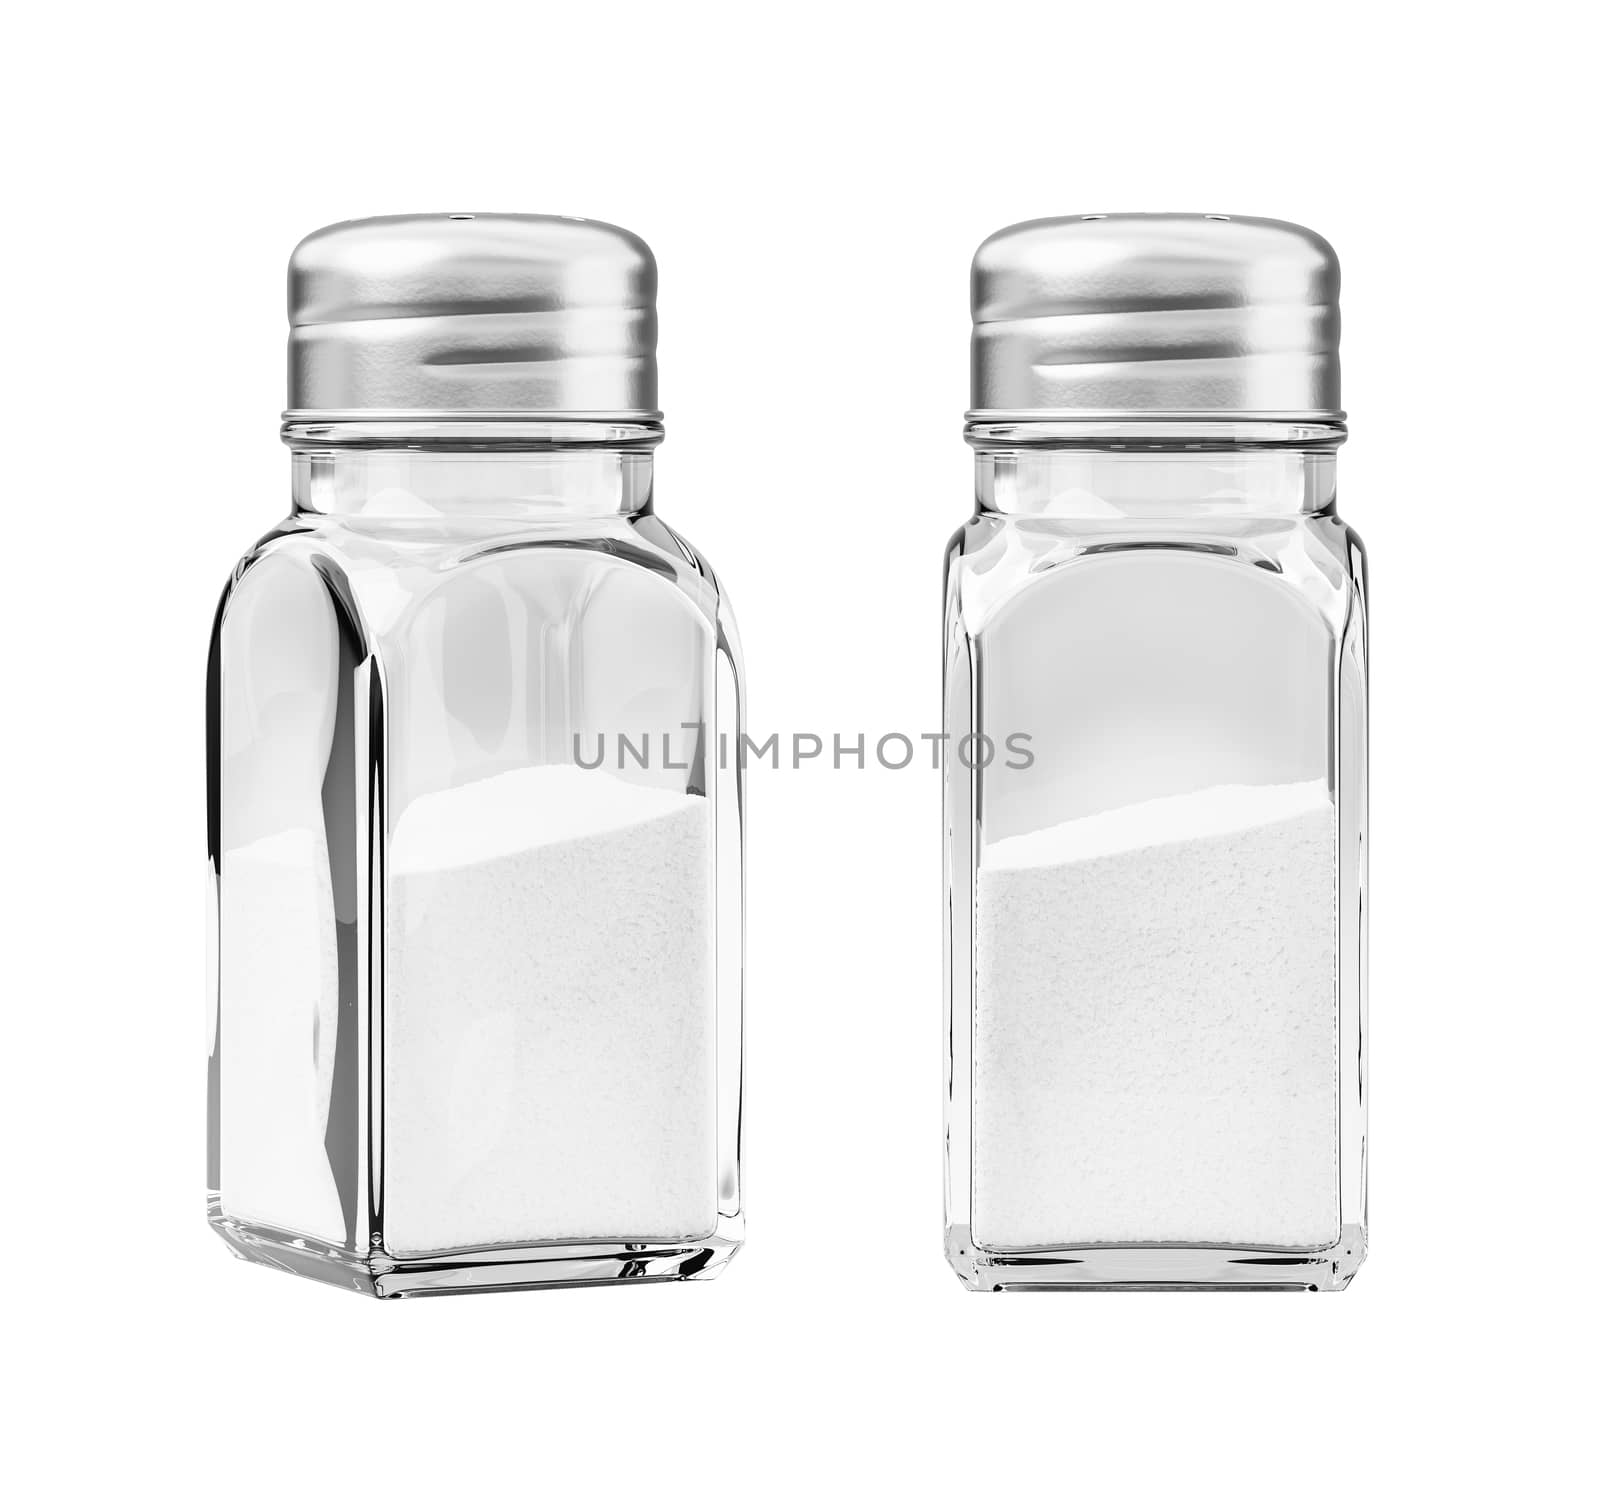 Salt in a Glassy Salt Shaker with Metallic Screw Cap Isolated on White Background 3D Illustration